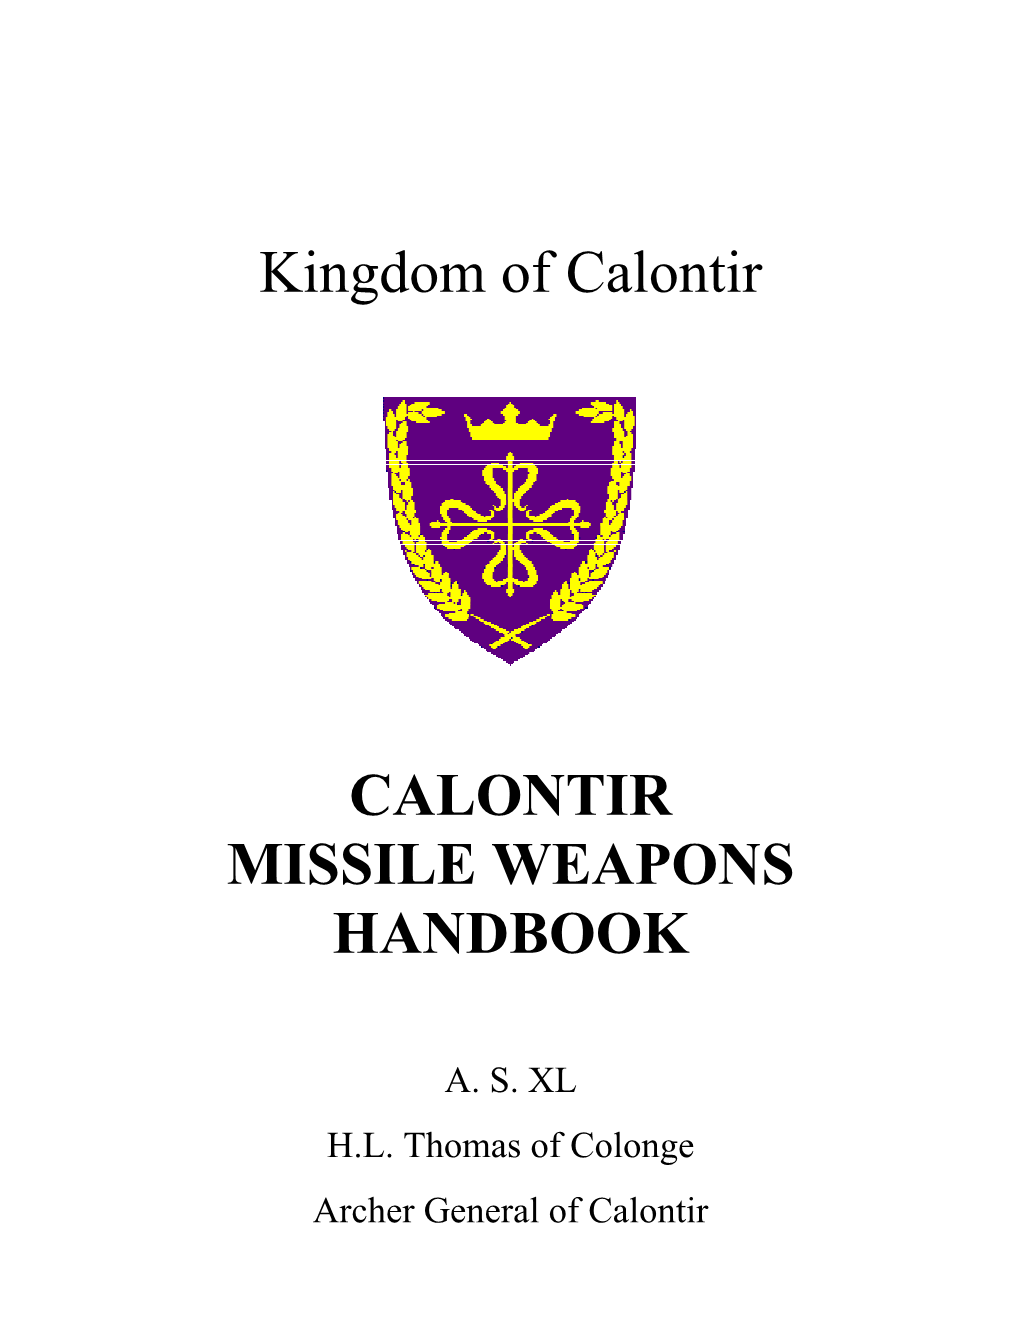 COPYRIGHT* 2006 Calontir Missile Weapon Handbook